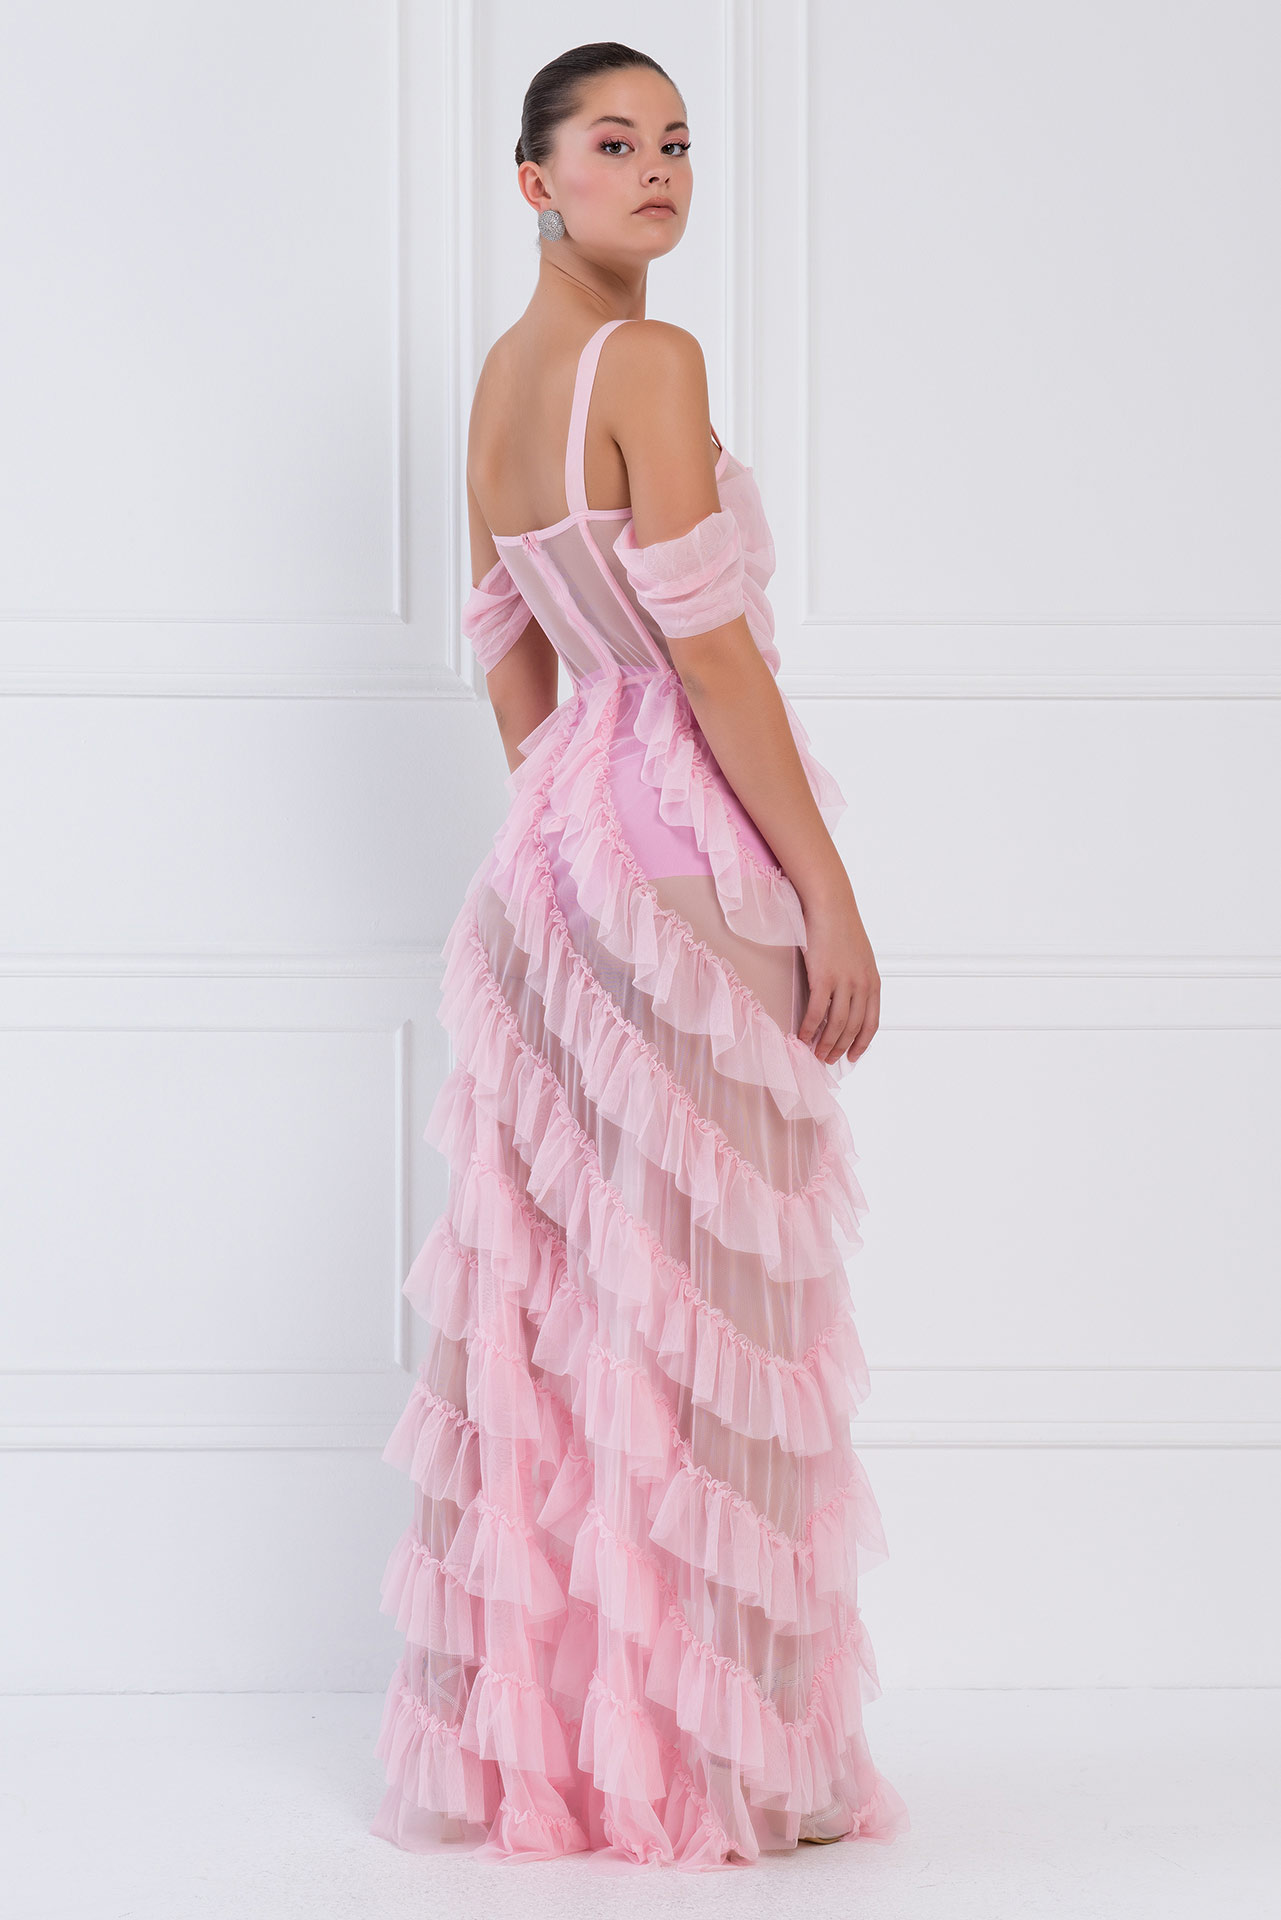 Wholesale Bella Style Light Pink Dress